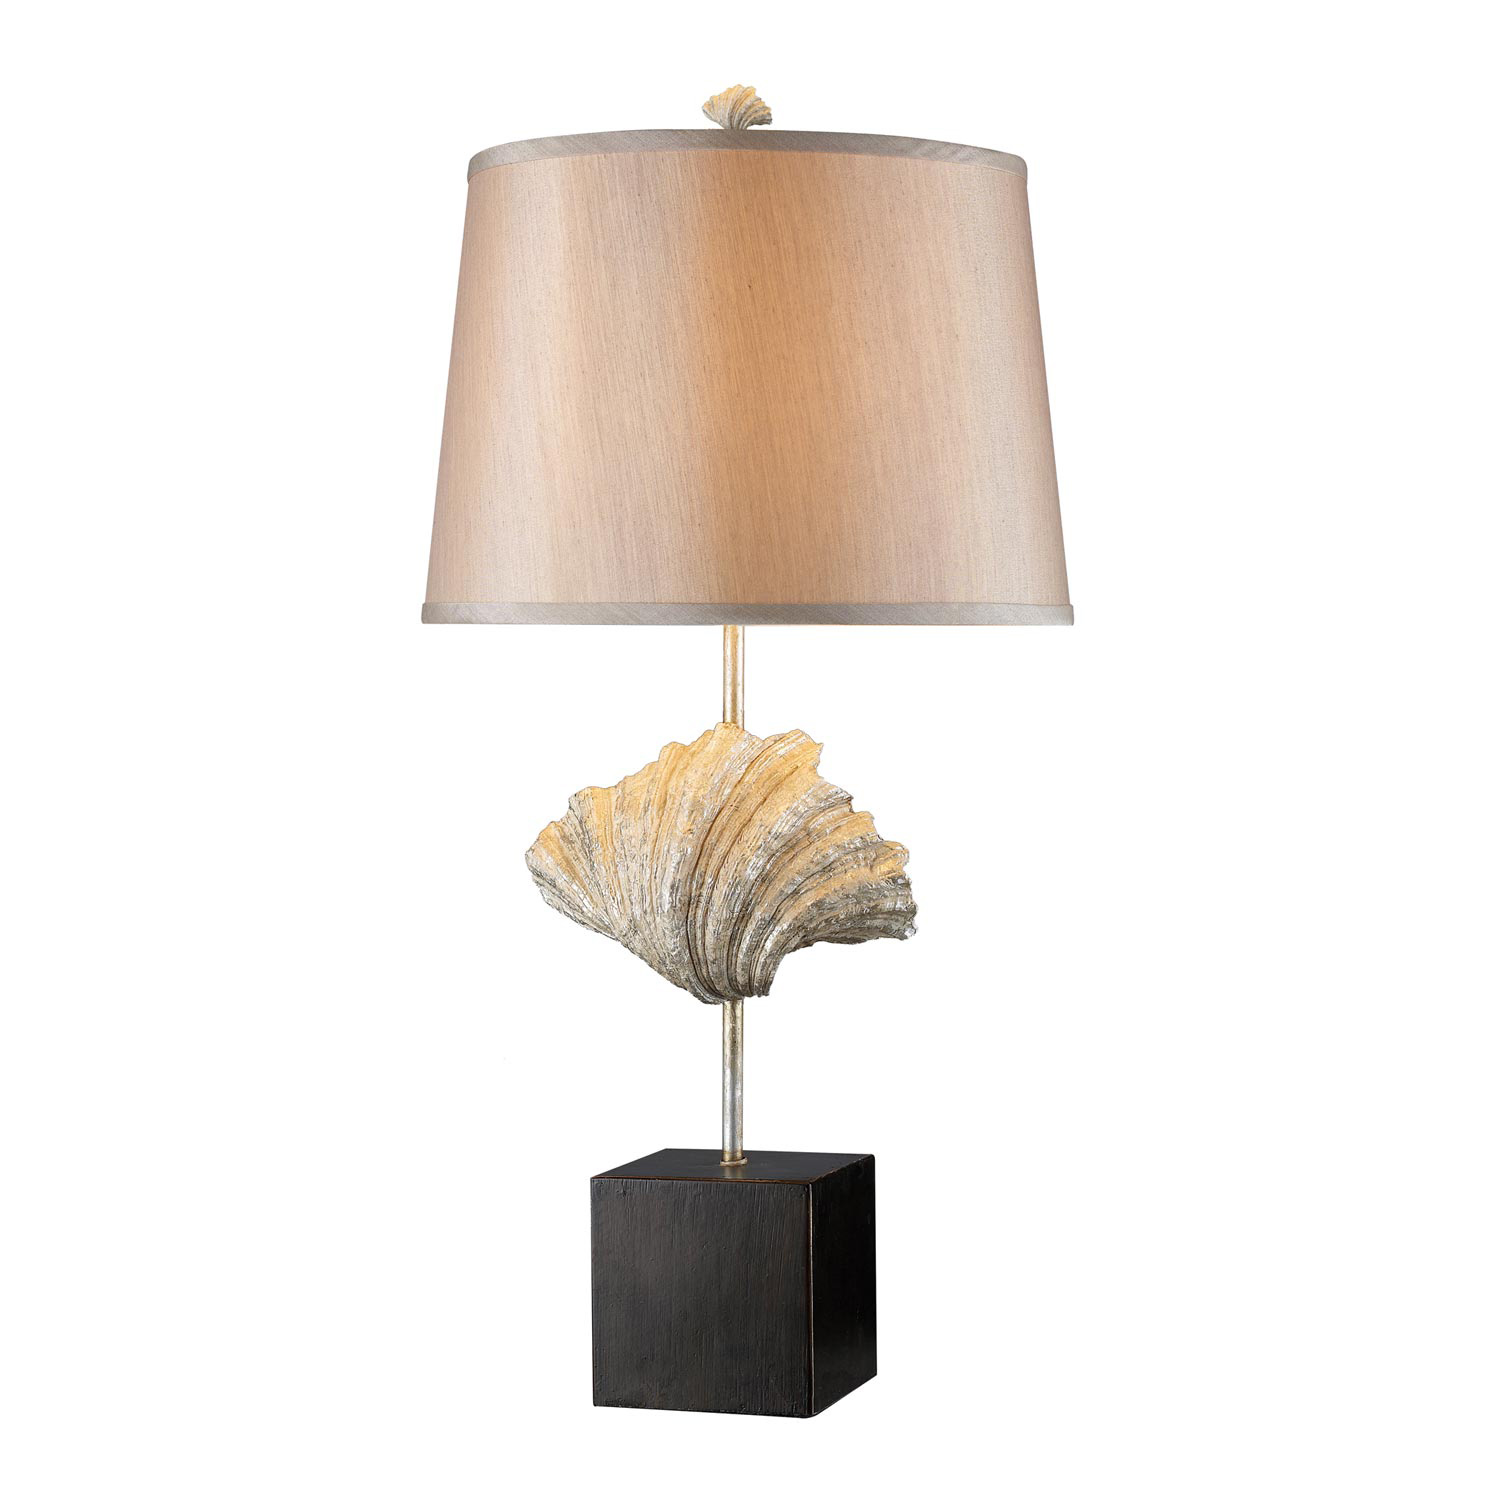 Elk Lighting D1976 Edgewater Table Lamp - Oyster Shell and Dark Bronze